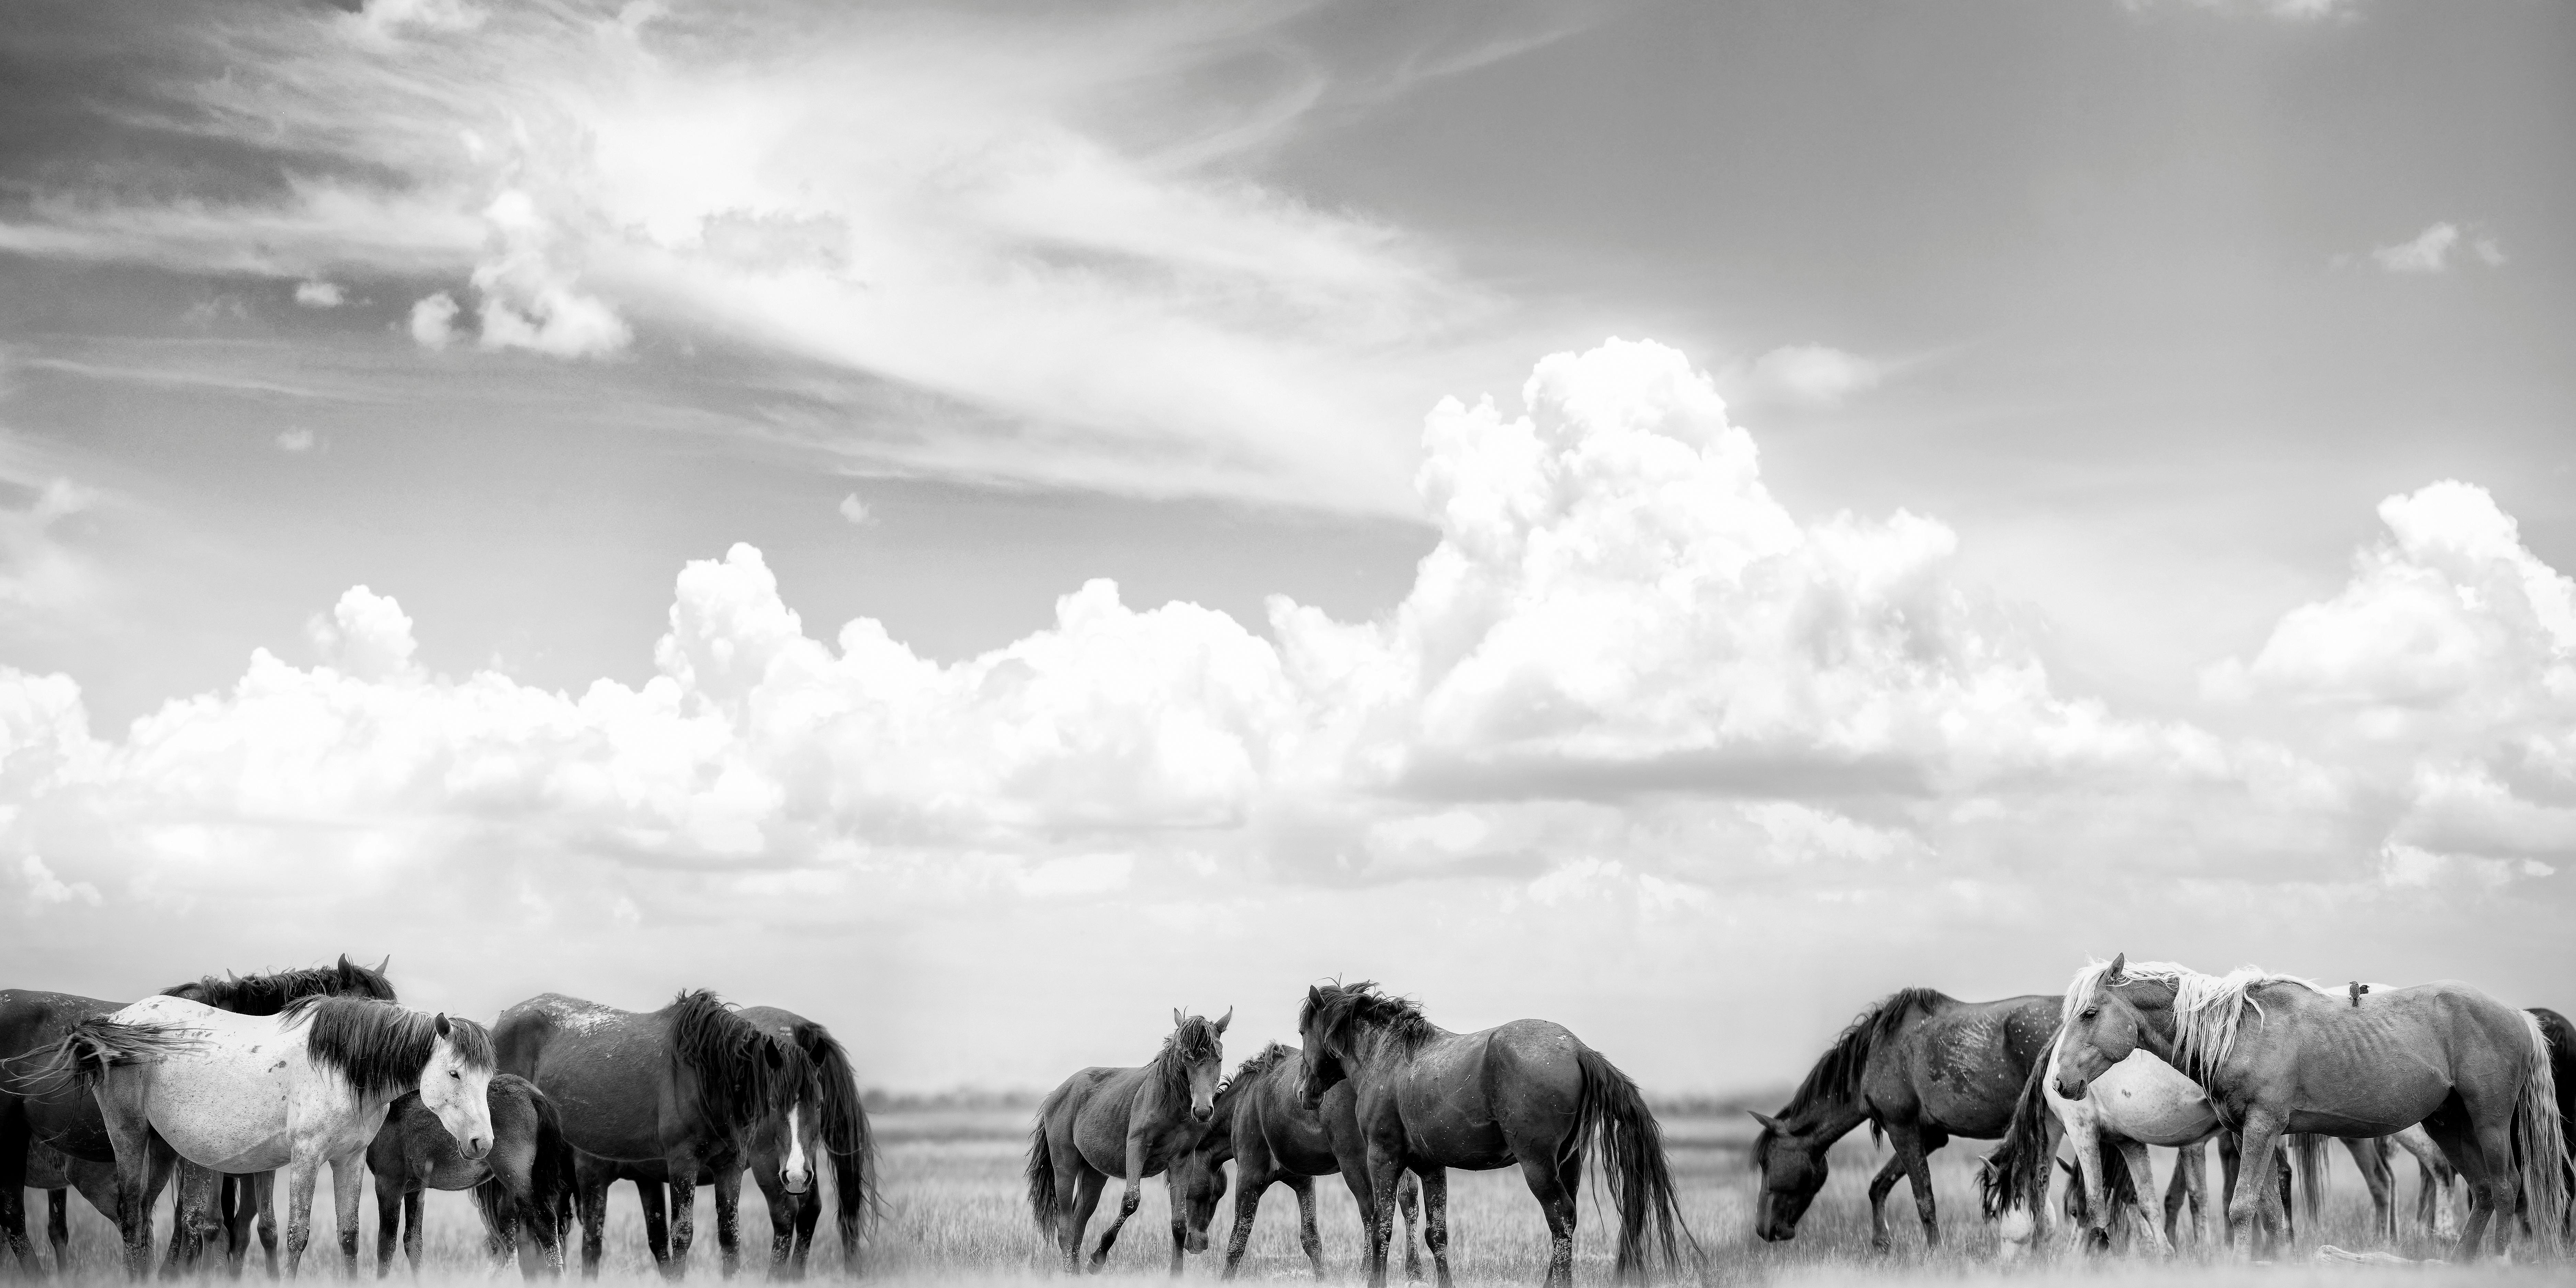 Shane Russeck Animal Print - "On Any Sunday" - 100x50 Wild Horse Photography, Fine Art Photograph